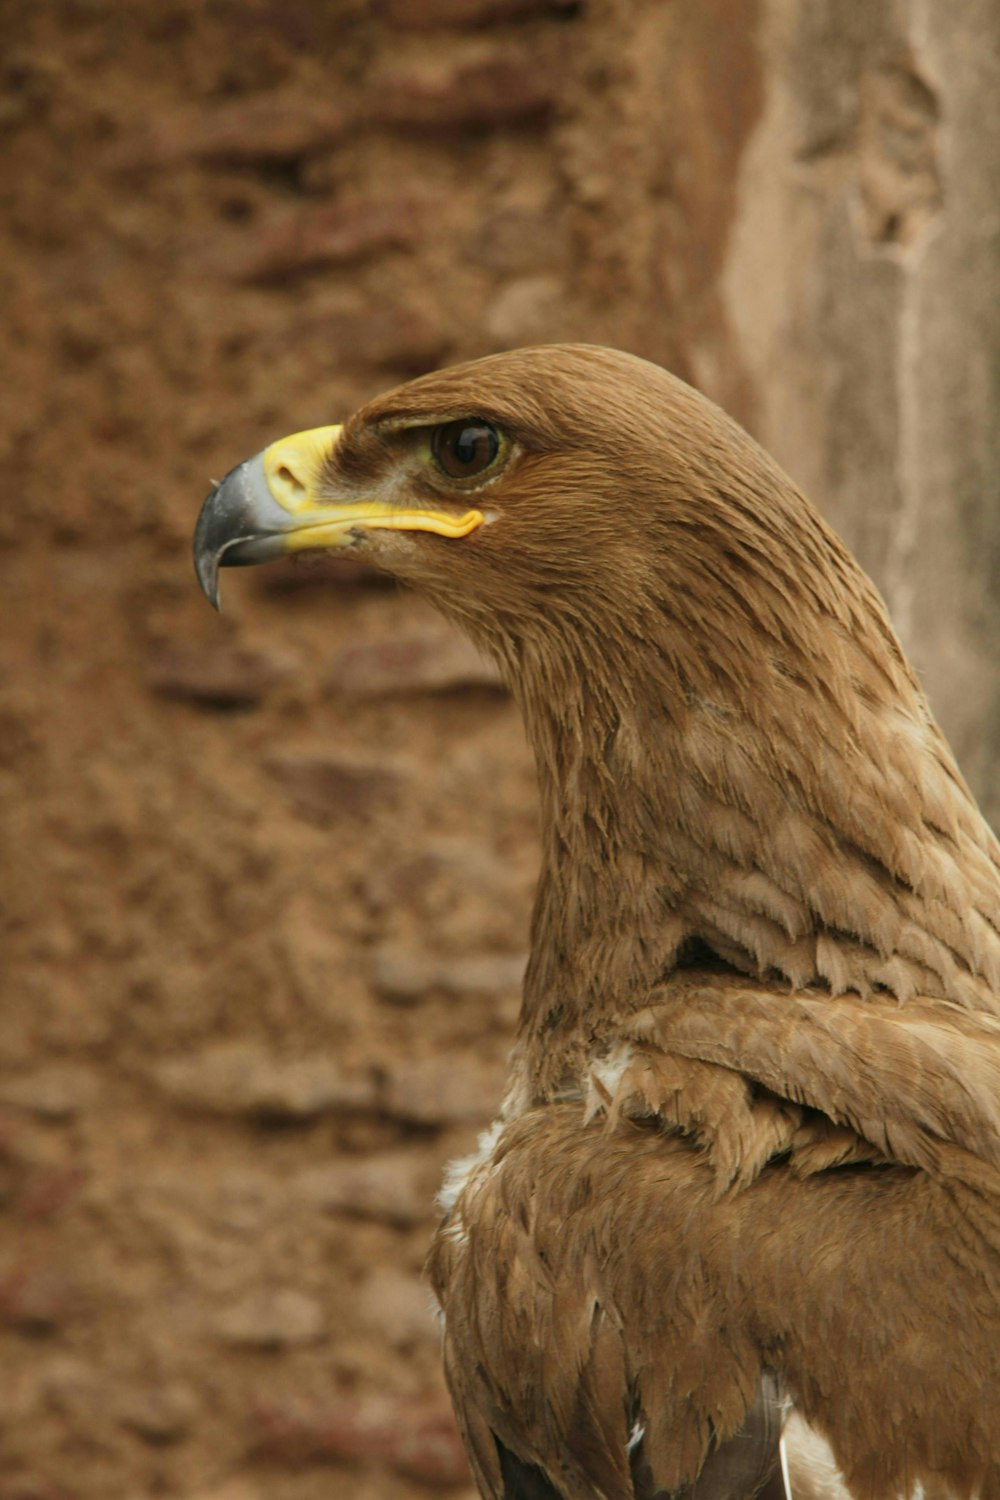 a large brown bird with a yellow beak